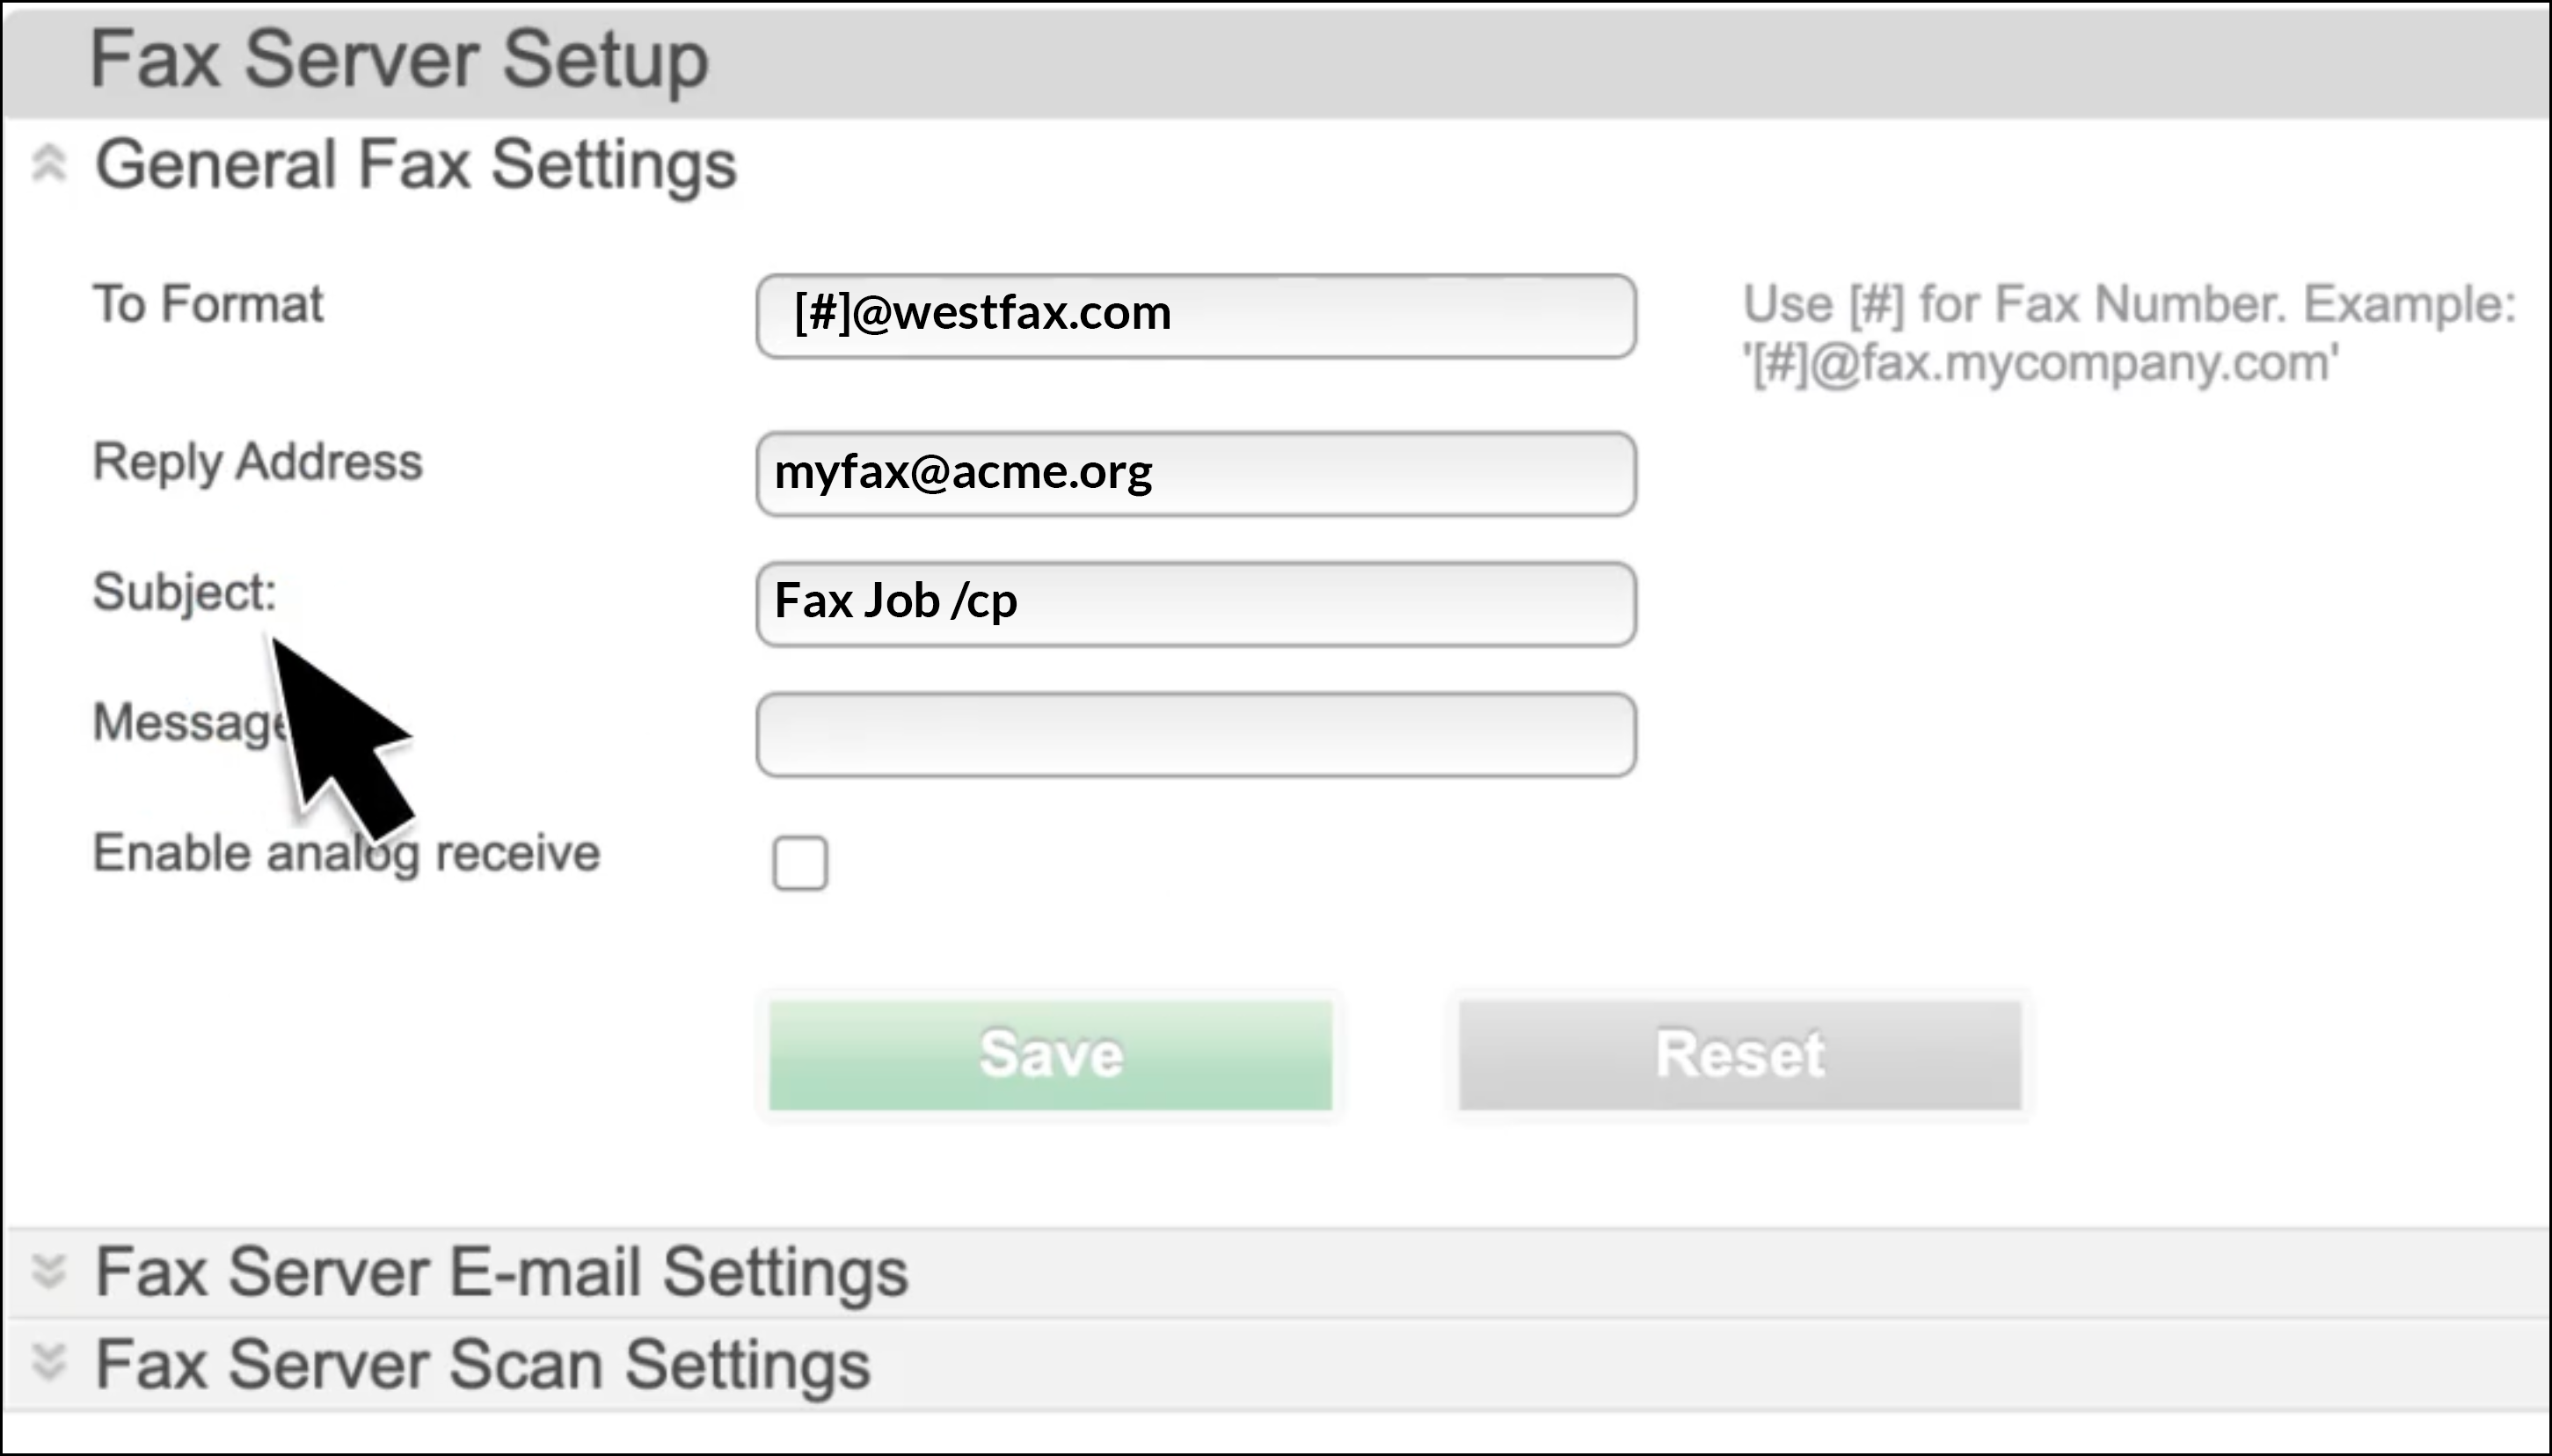 Fax Server Setup Settings